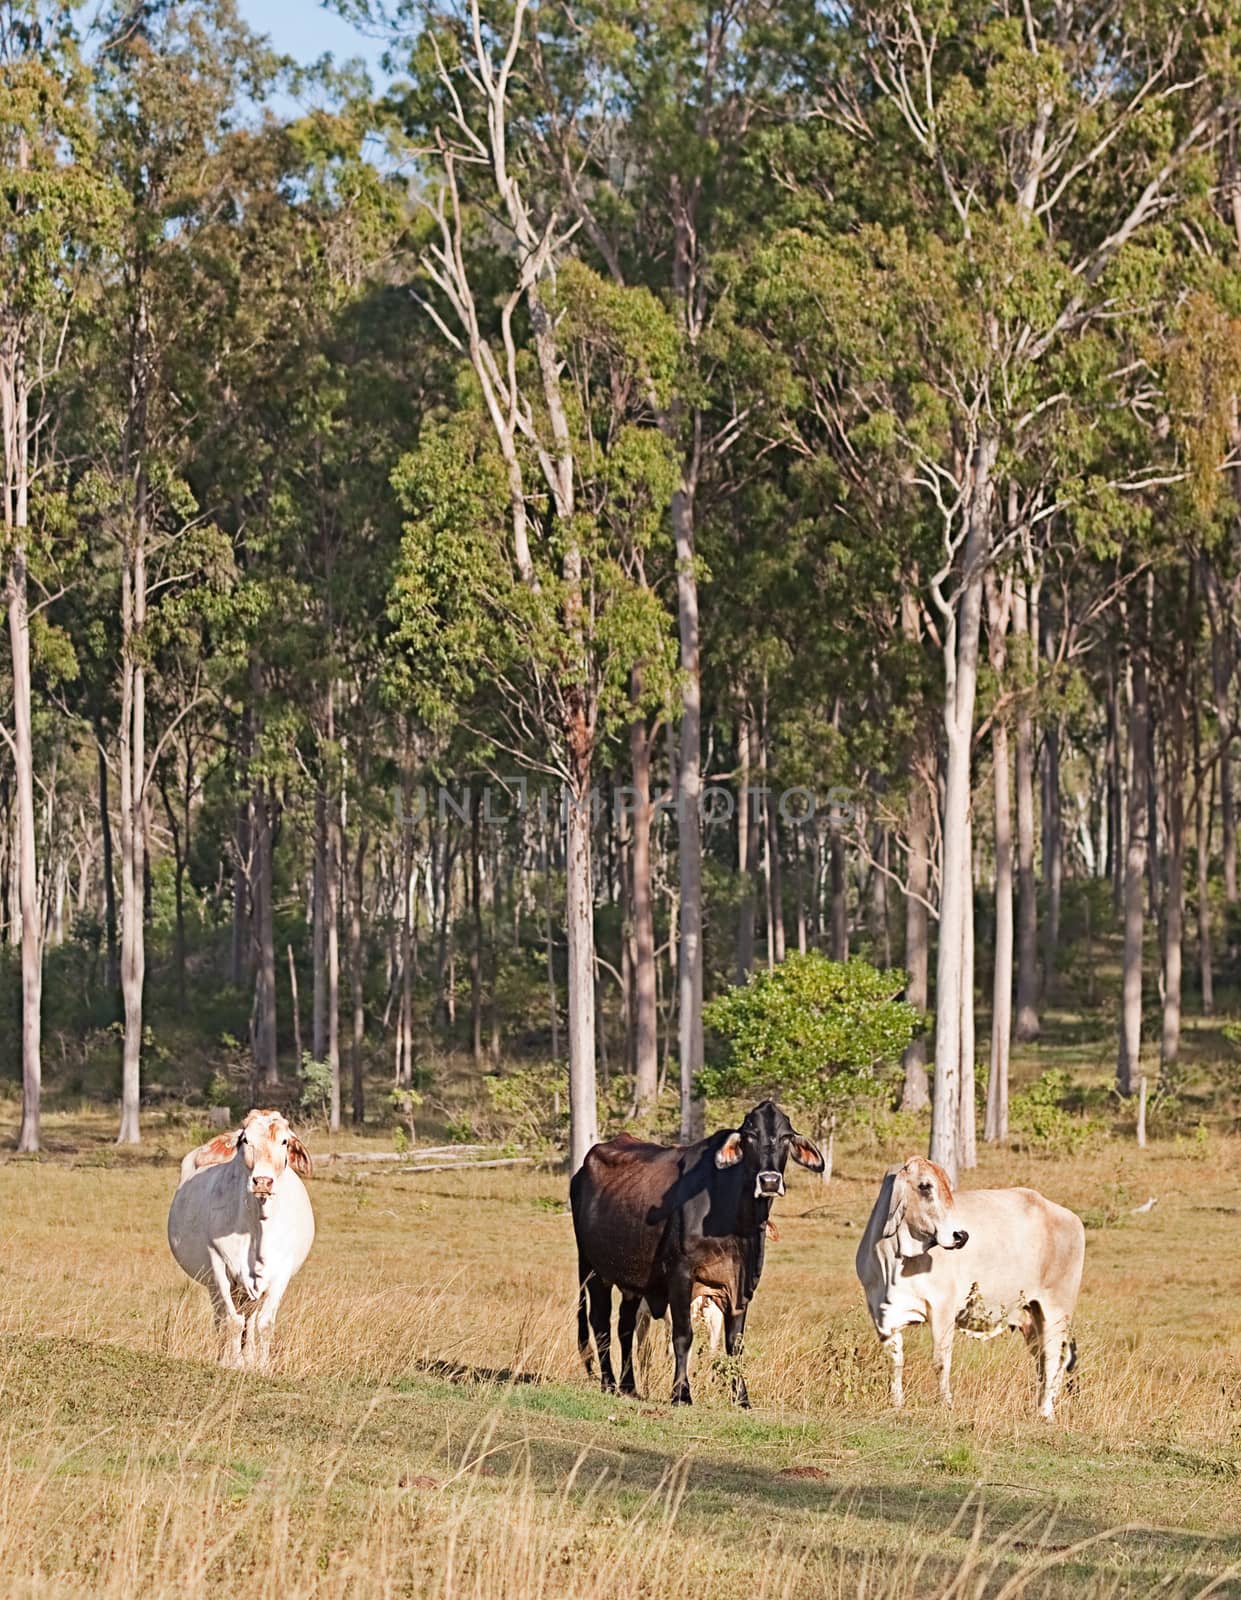 Rural Australia three cows in Australian pastoral eucalyptus gum tree forest landscape